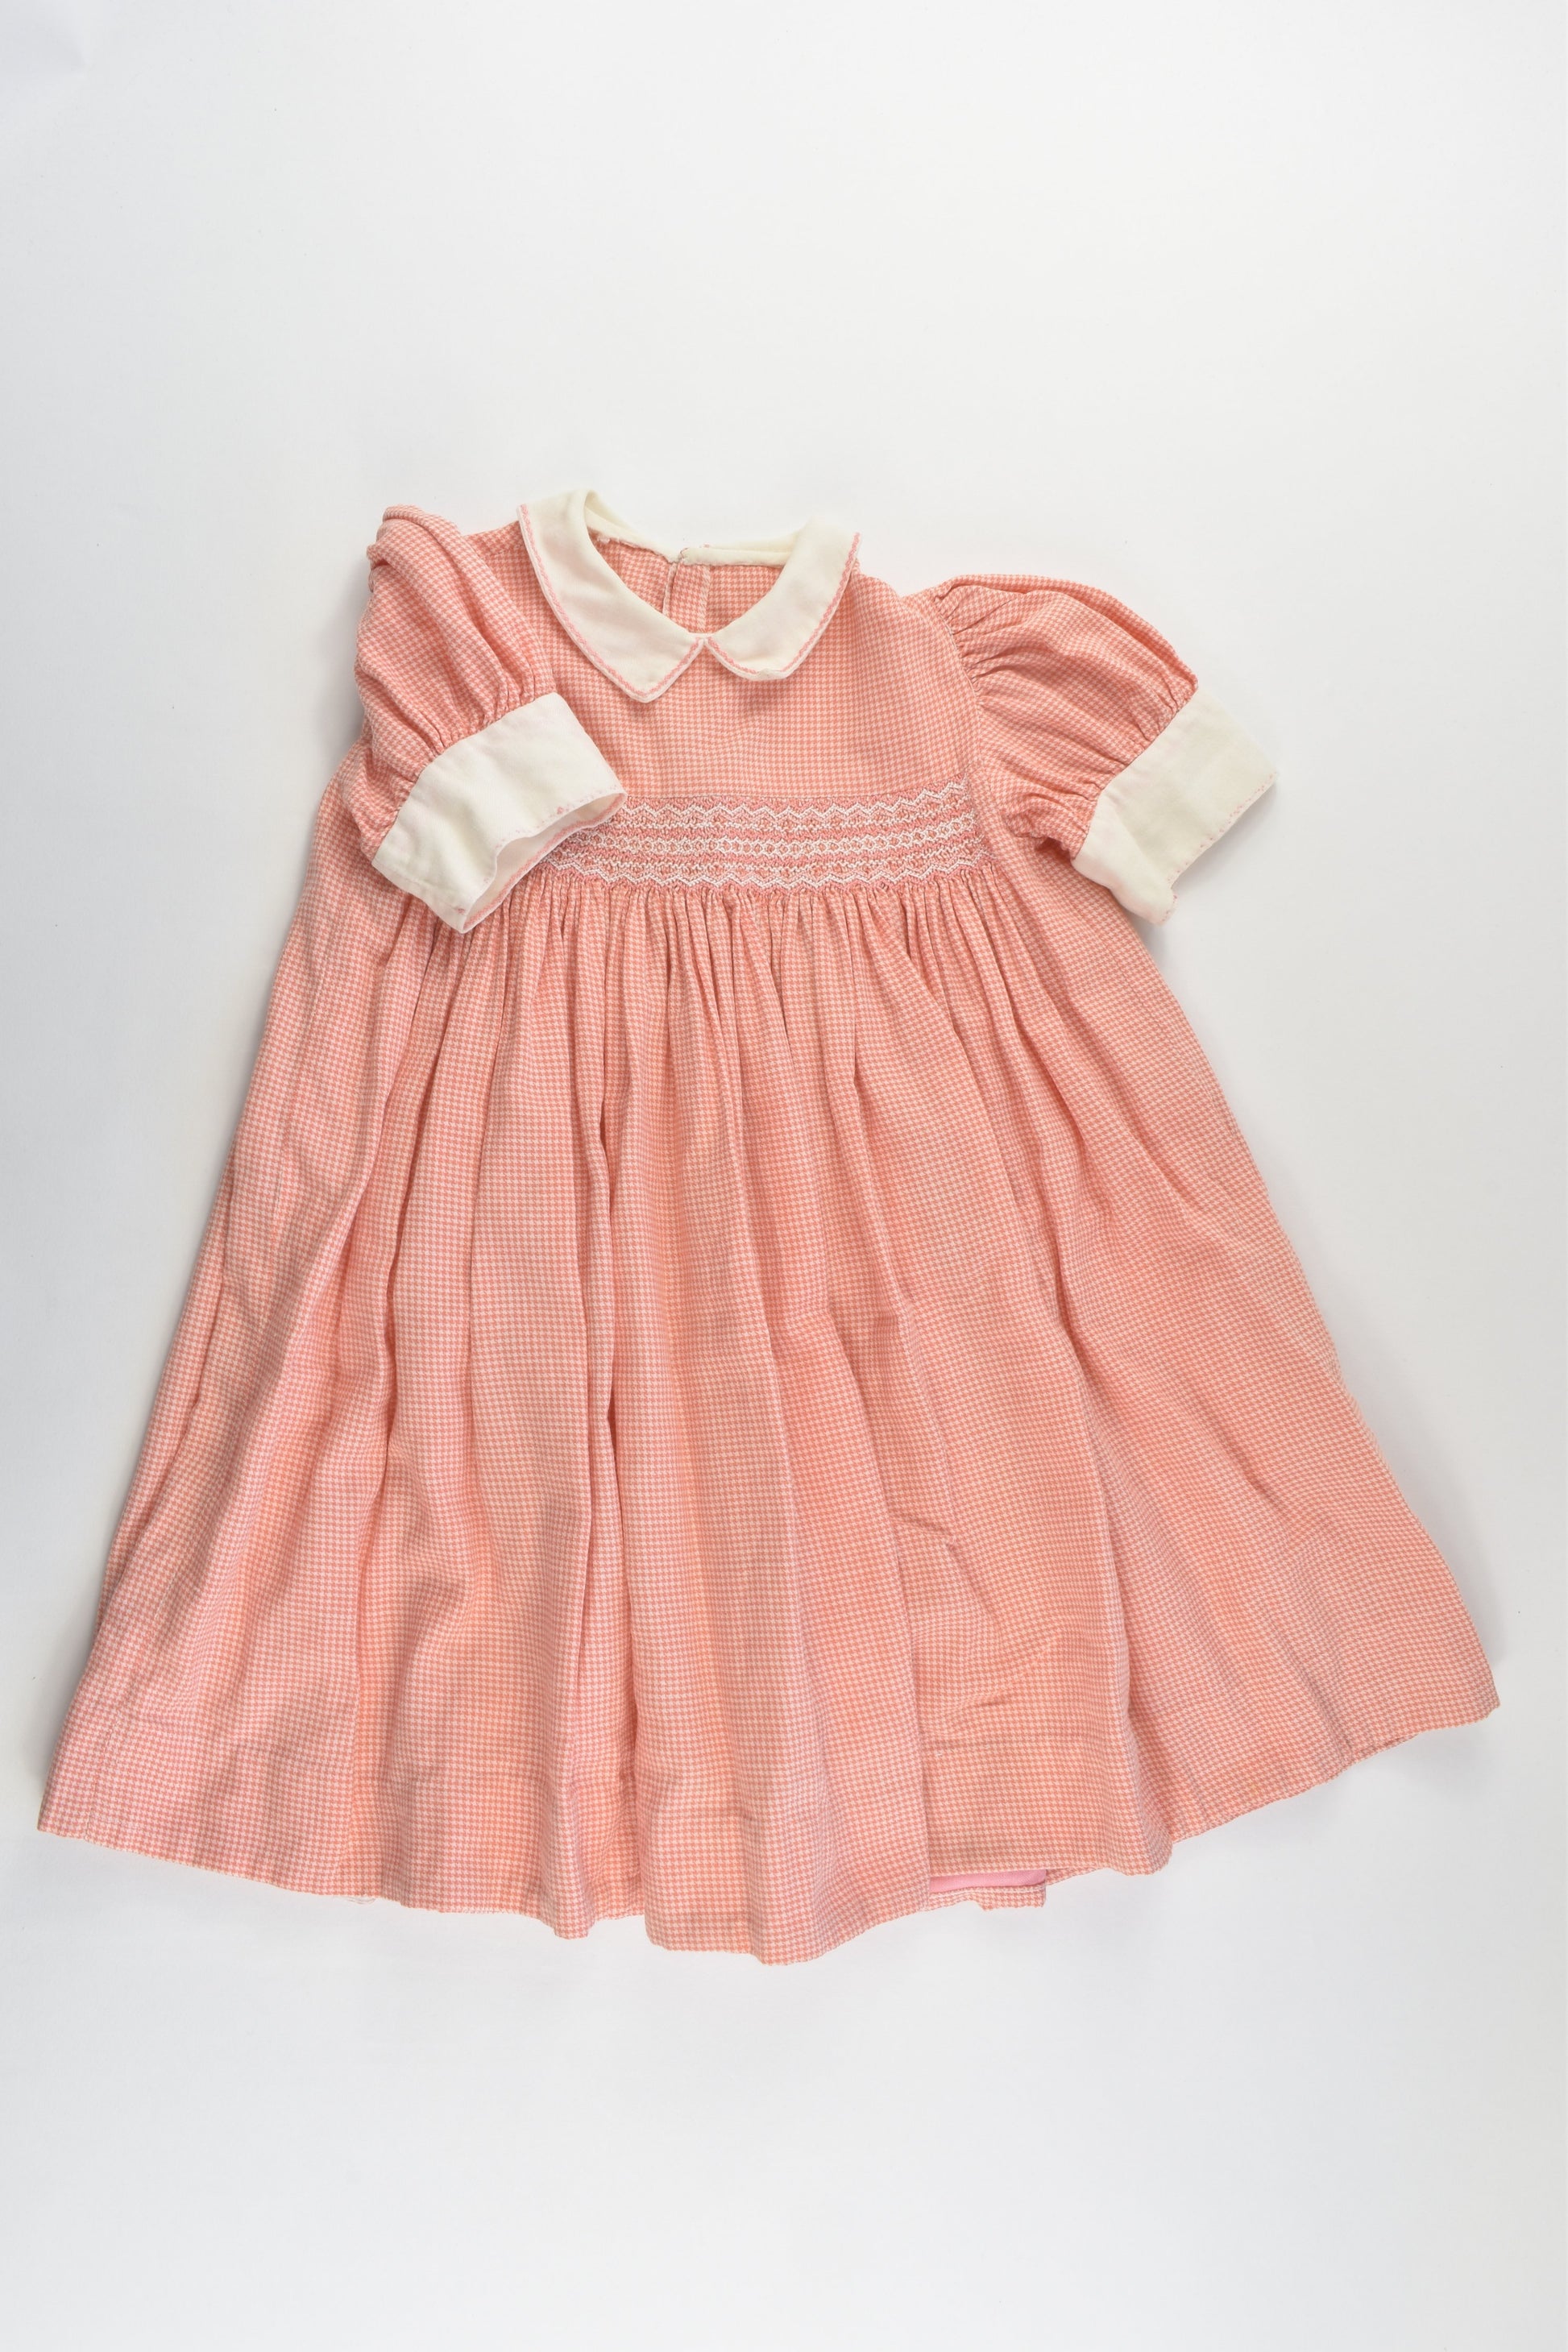 Handmade Size approx 1-2 Vintage Smocked Dress